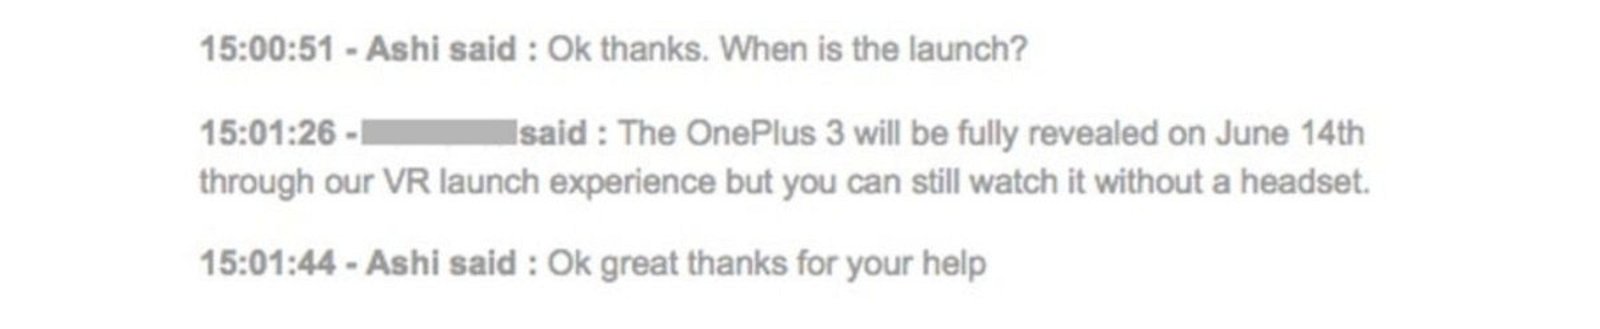 filtracion fecha presentacion OnePlus 3